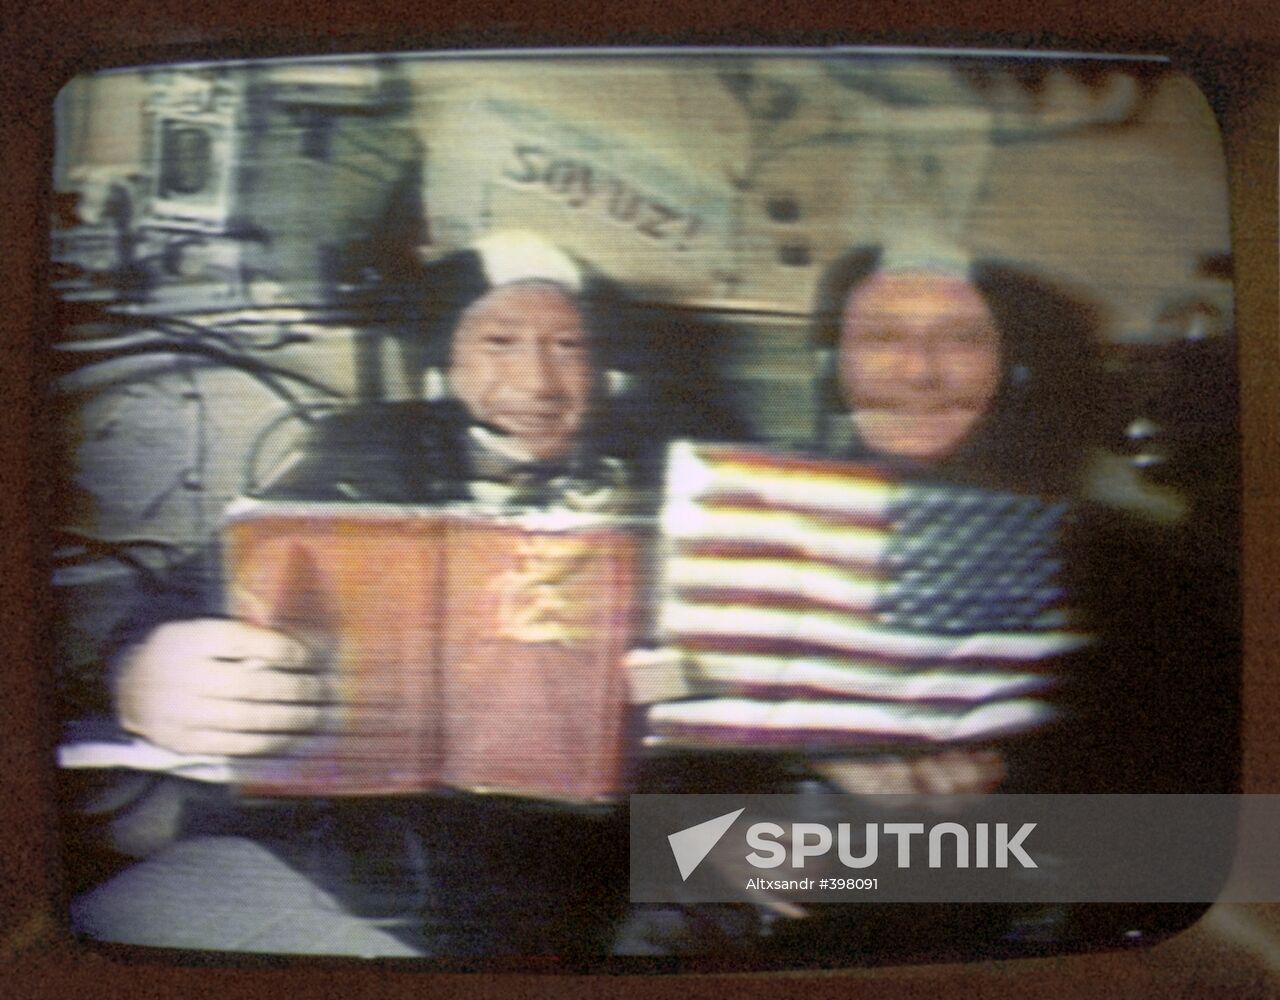 Leonov and Stafford in space flight